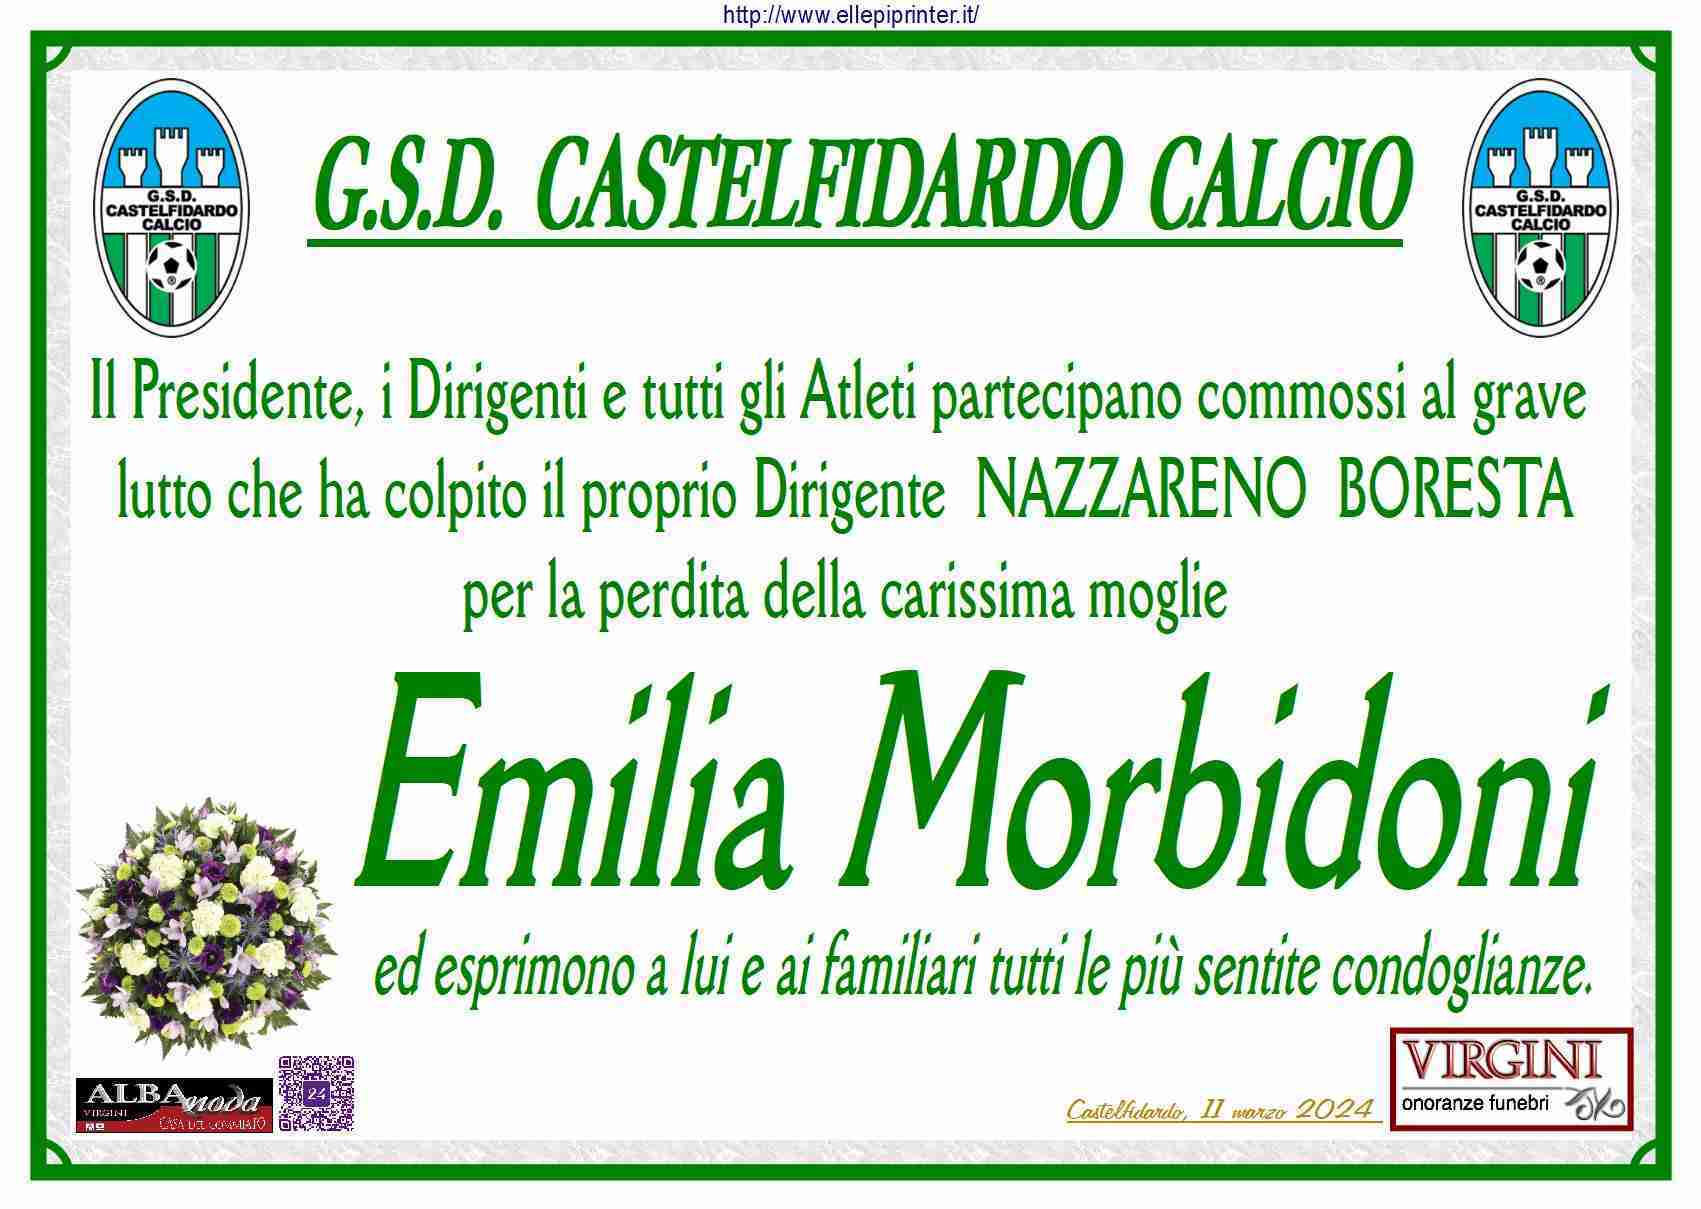 Emilia Morbidoni